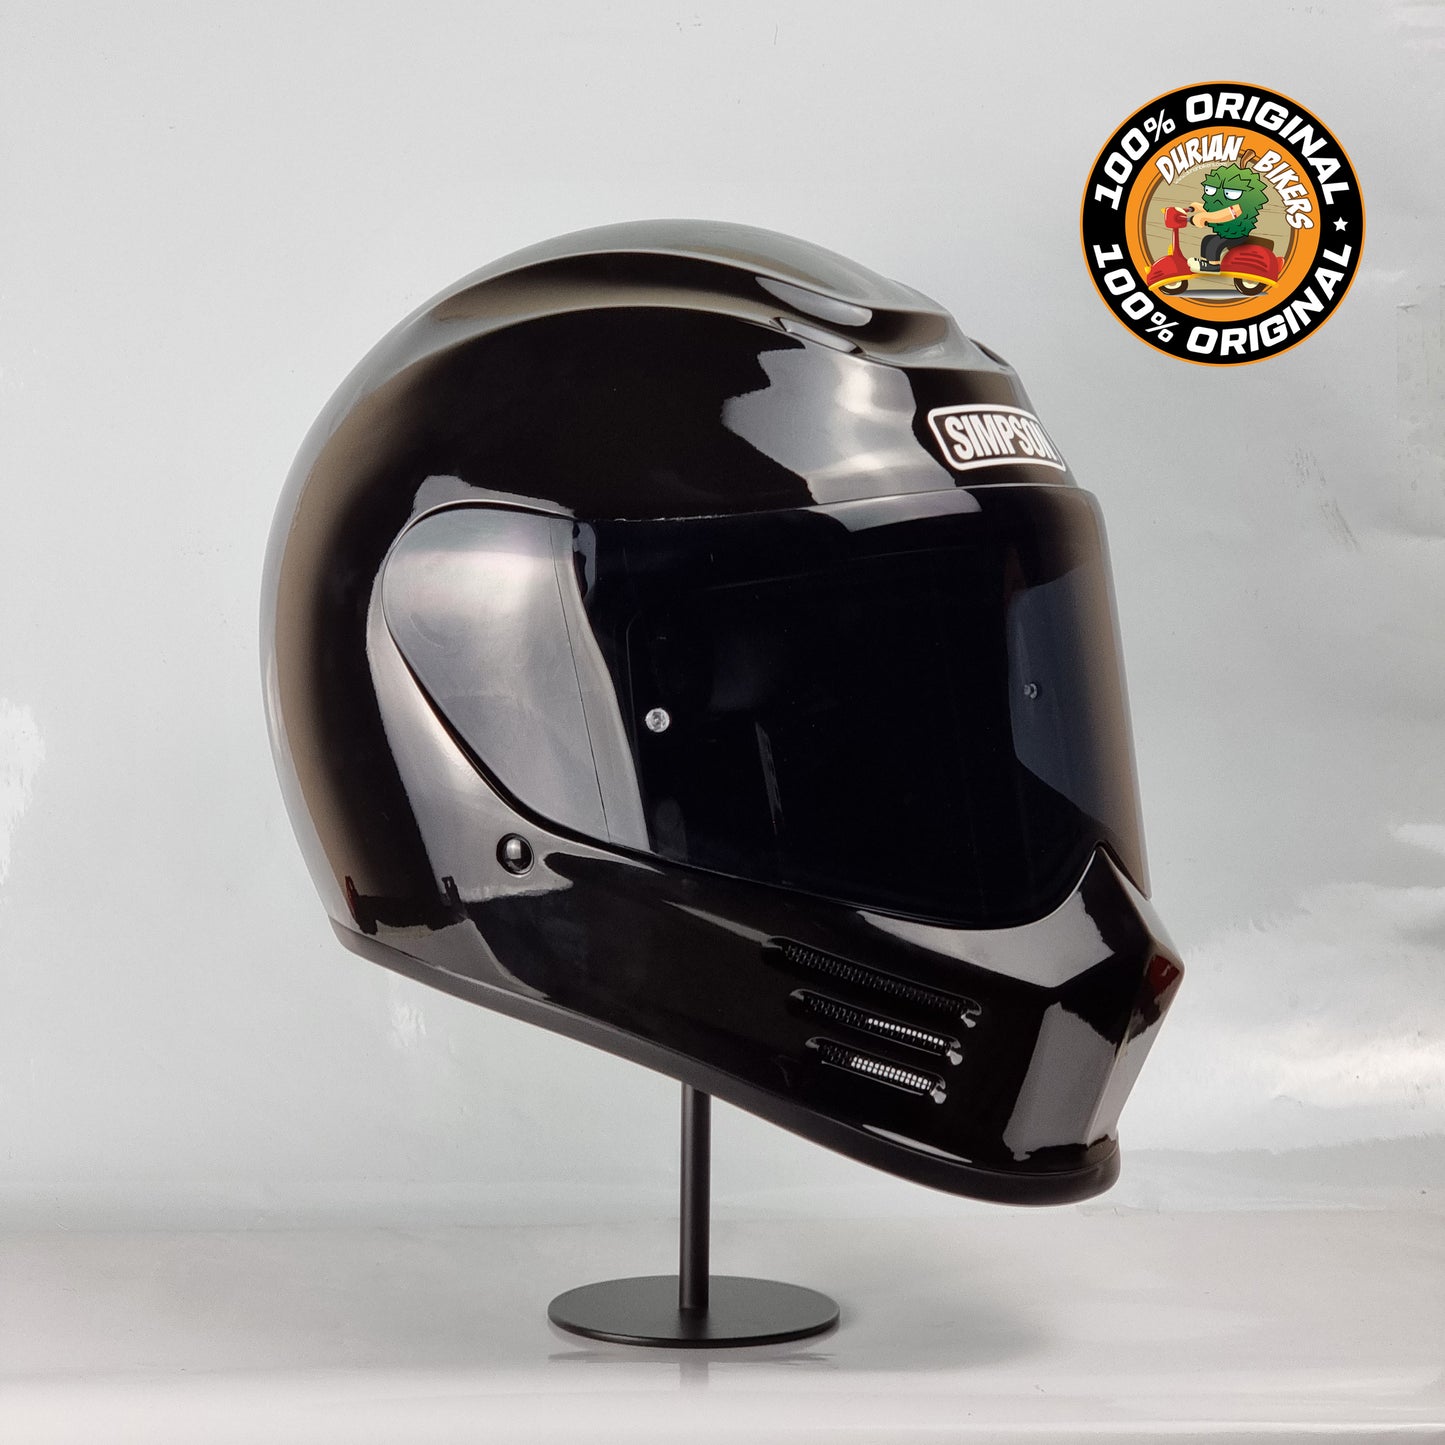 Simpson Helmet Speed Bandit (Gloss Black)